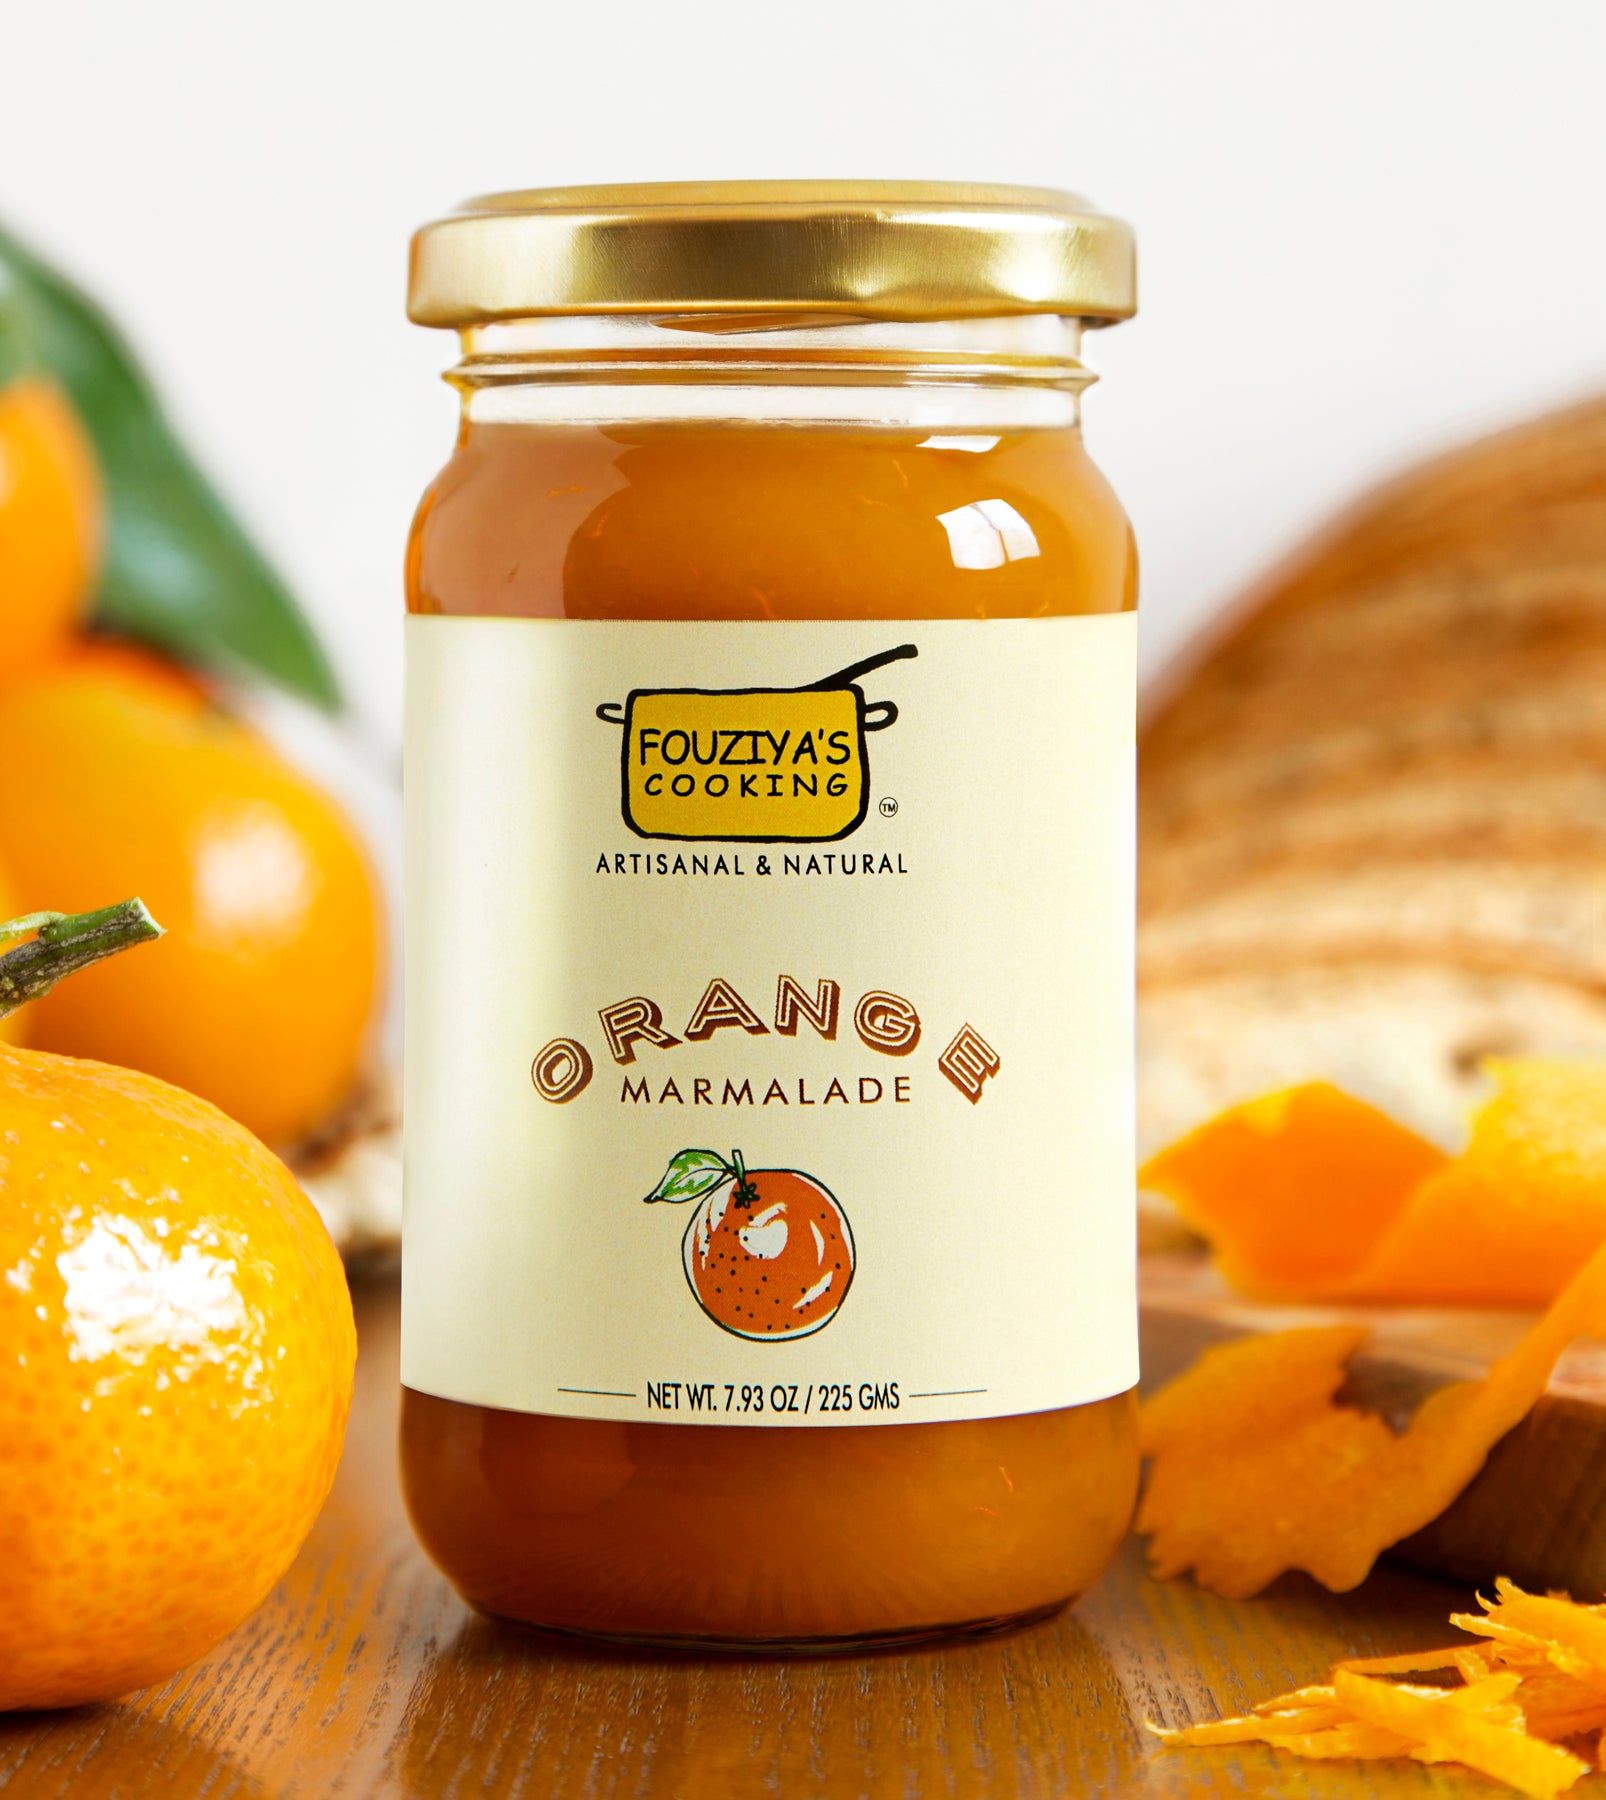 Fouziya's Orange marmalade